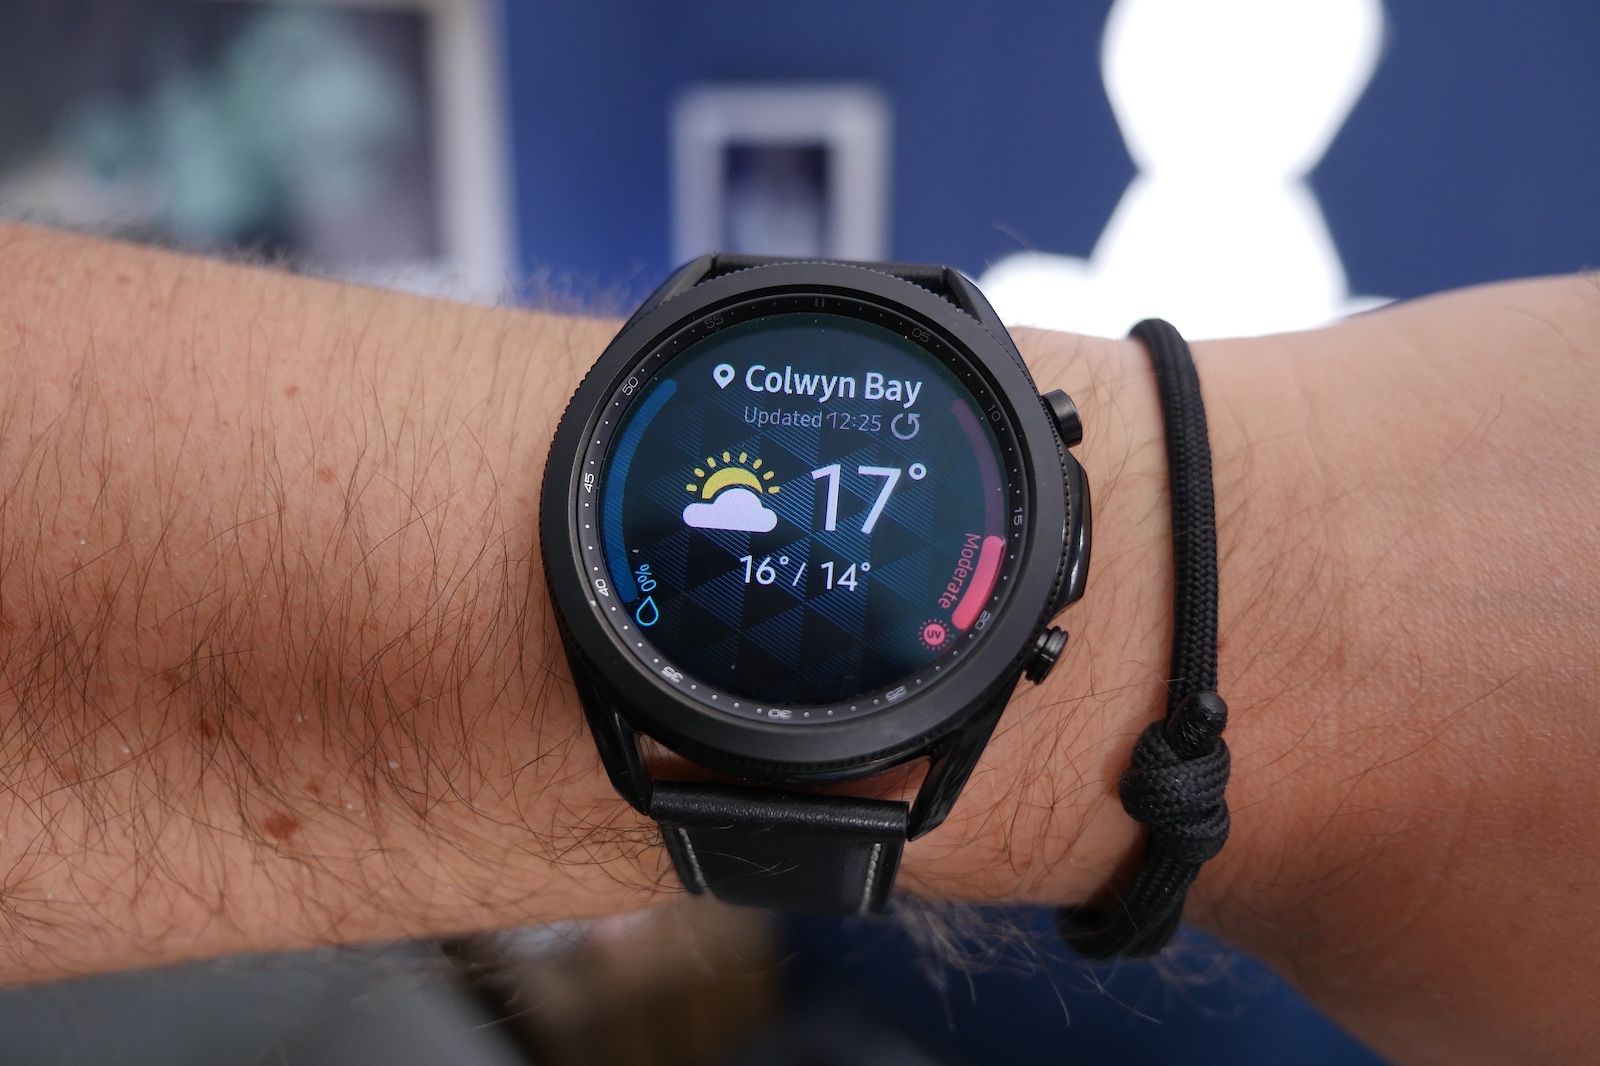 Galaxy Watch 3 hardware photo 1